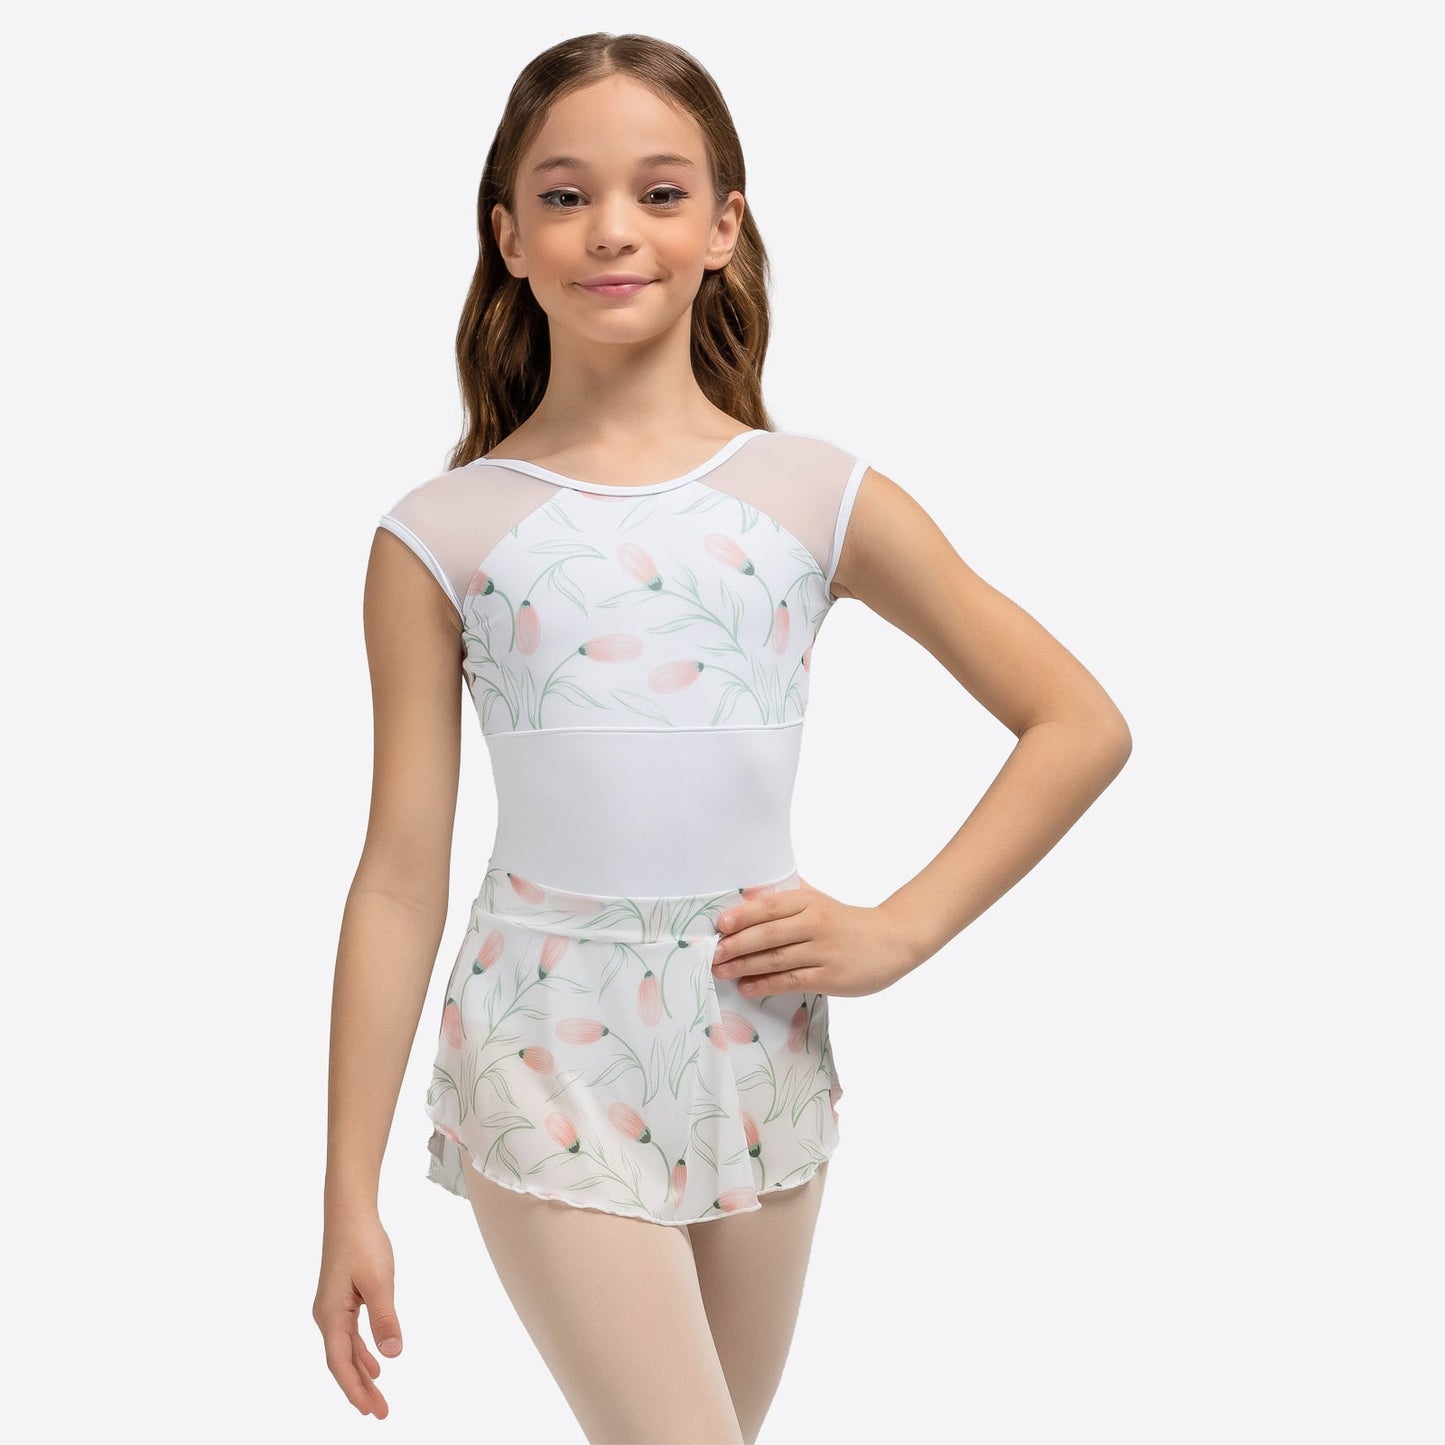 Lupica Kid's Skirt - L-2299